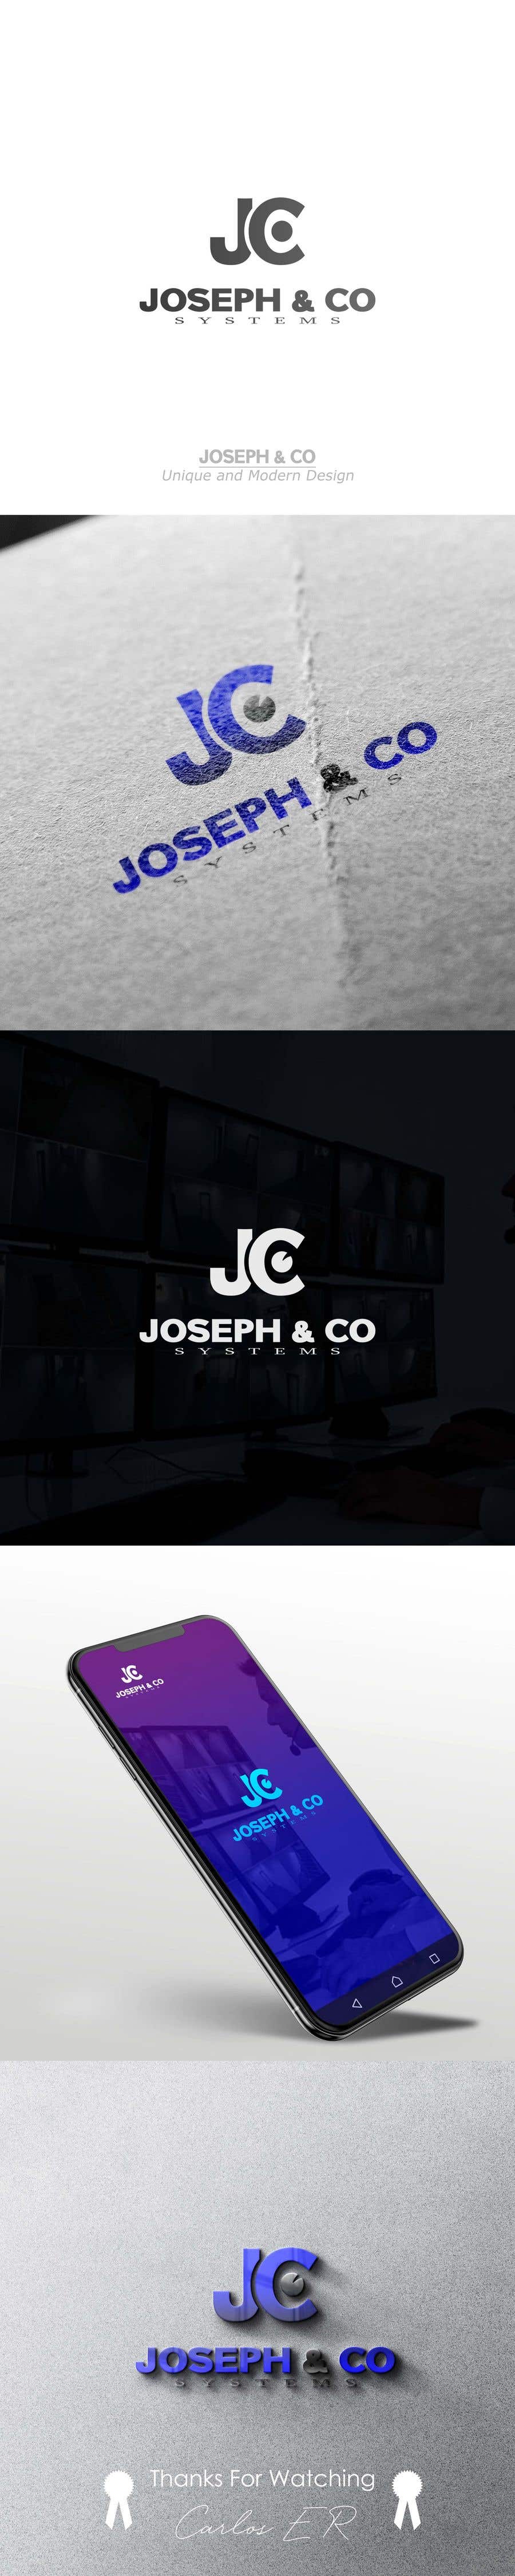 Contest Entry #101 for                                                 Joseph & Co. Systems - 29/11/2020 20:55 EST
                                            